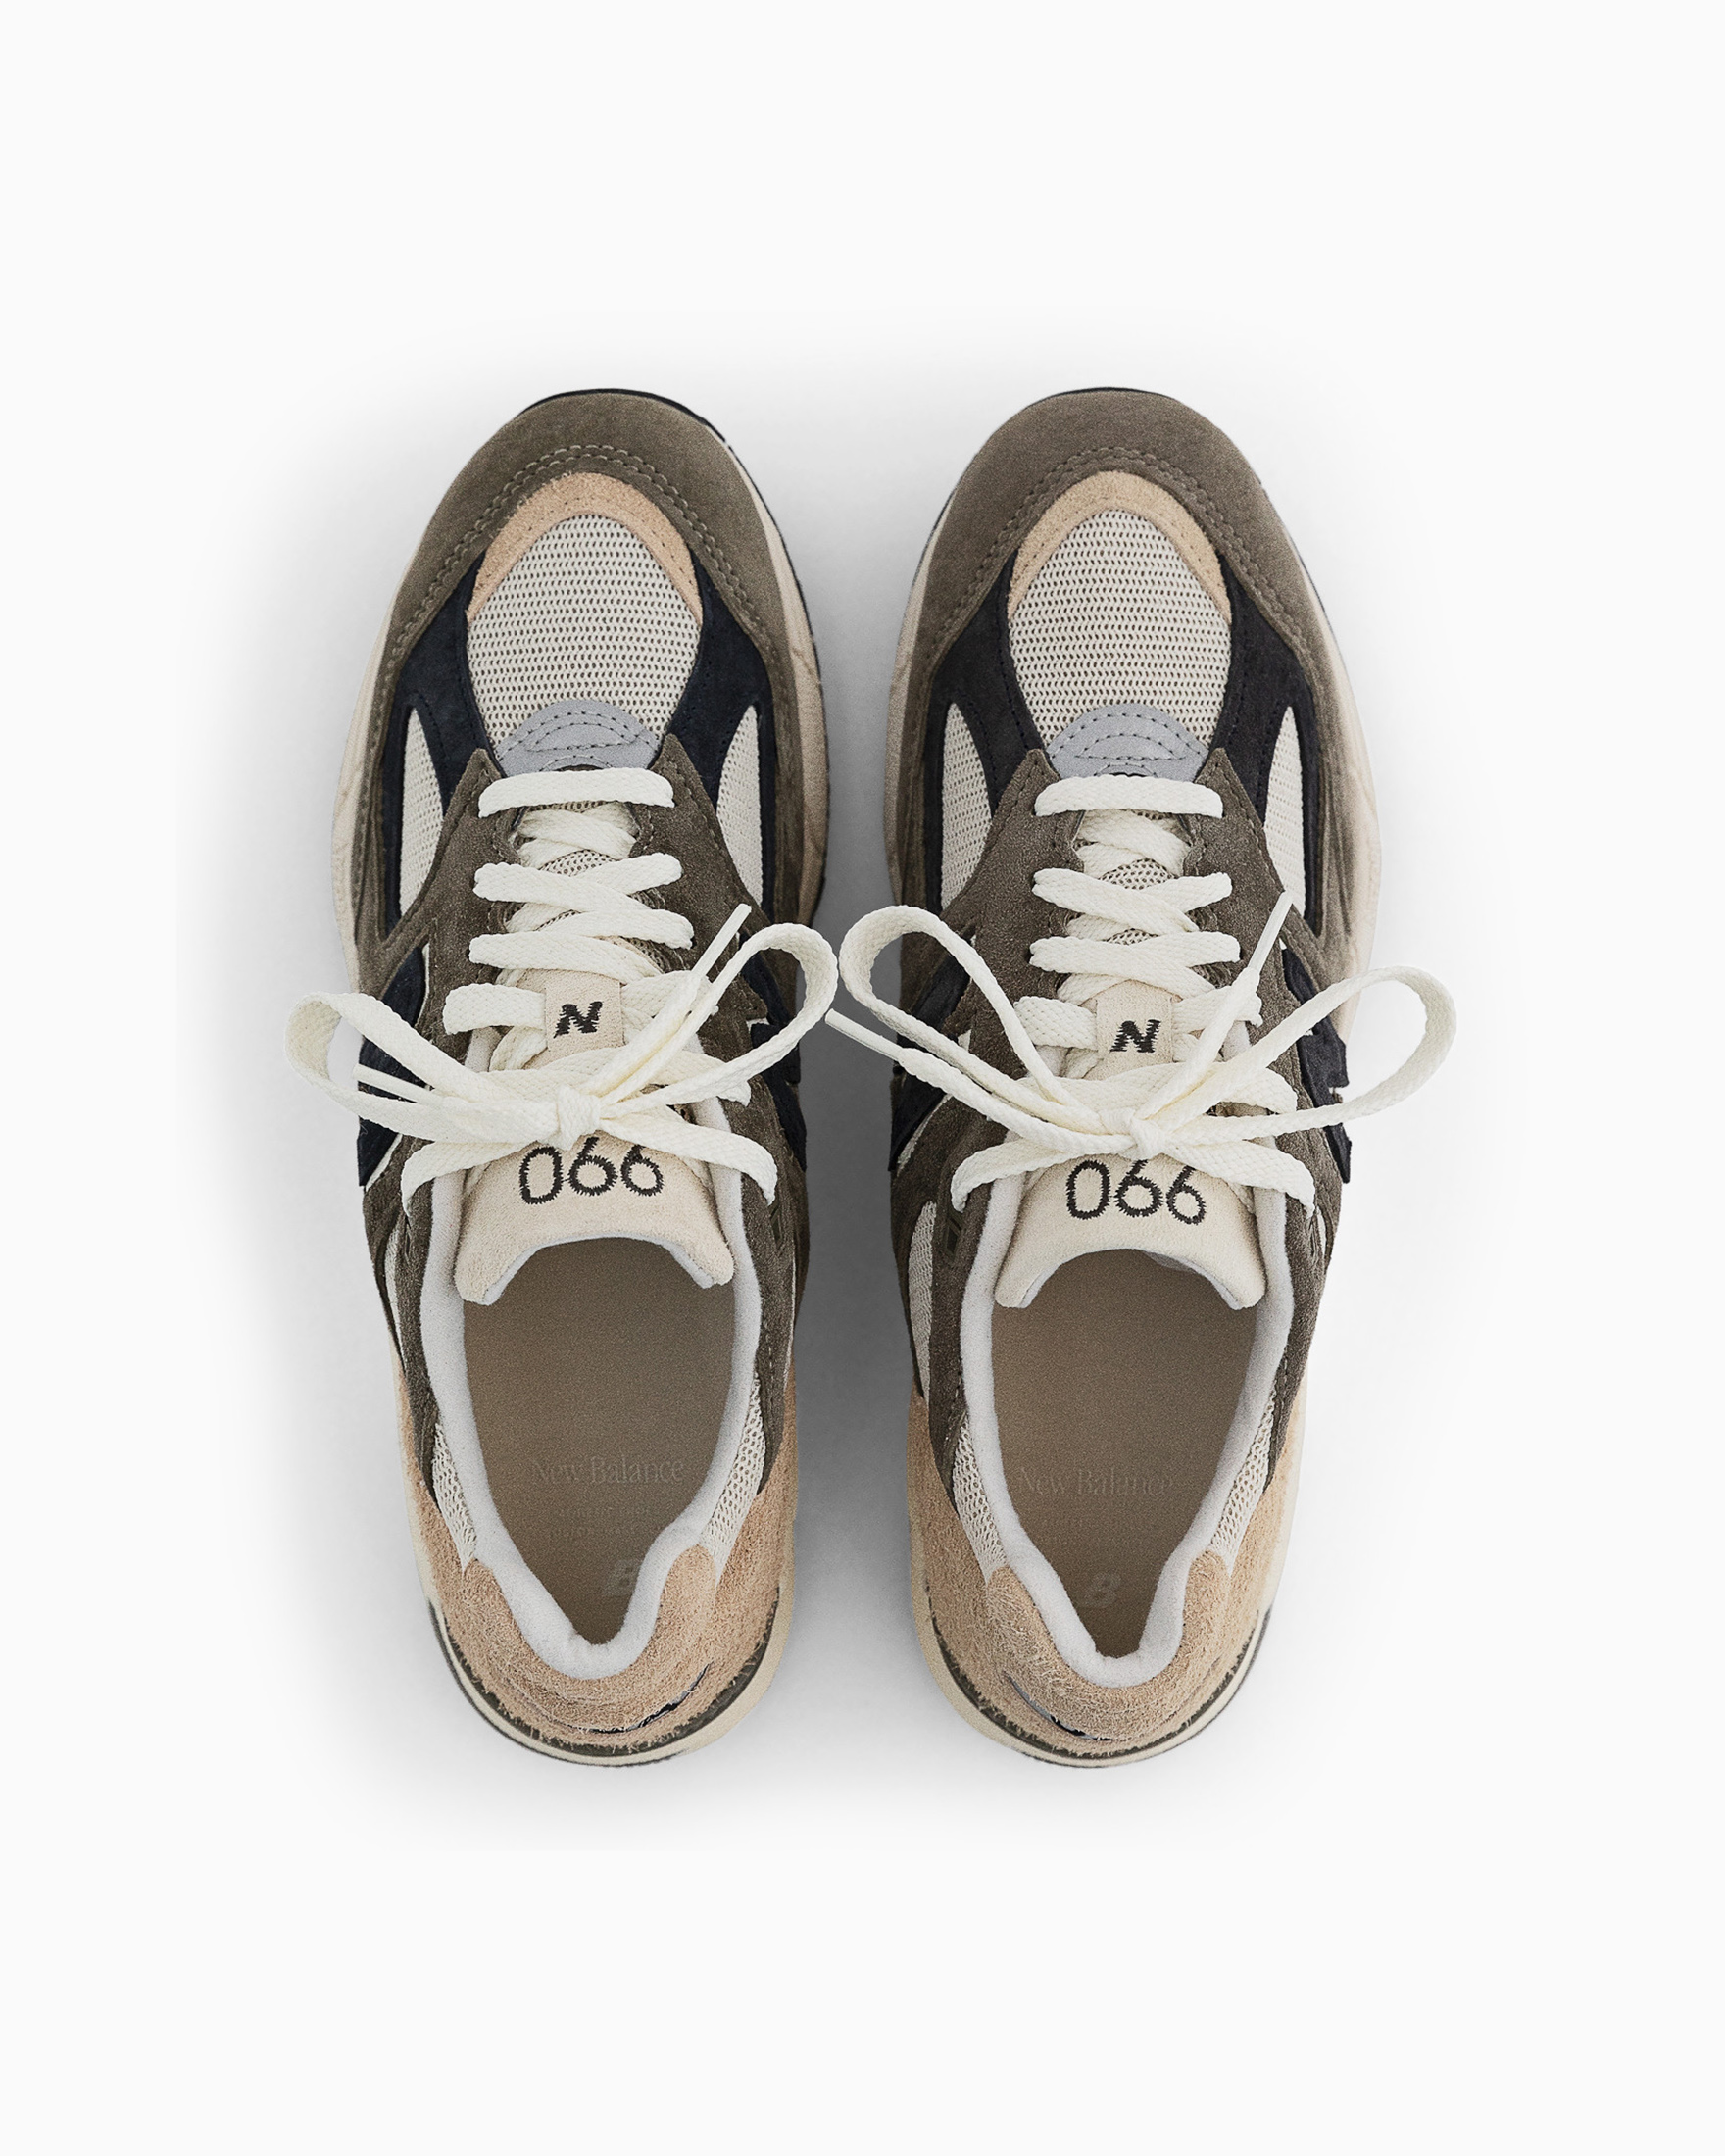 M990GB2 New Balance Footwear Sneakers Grey